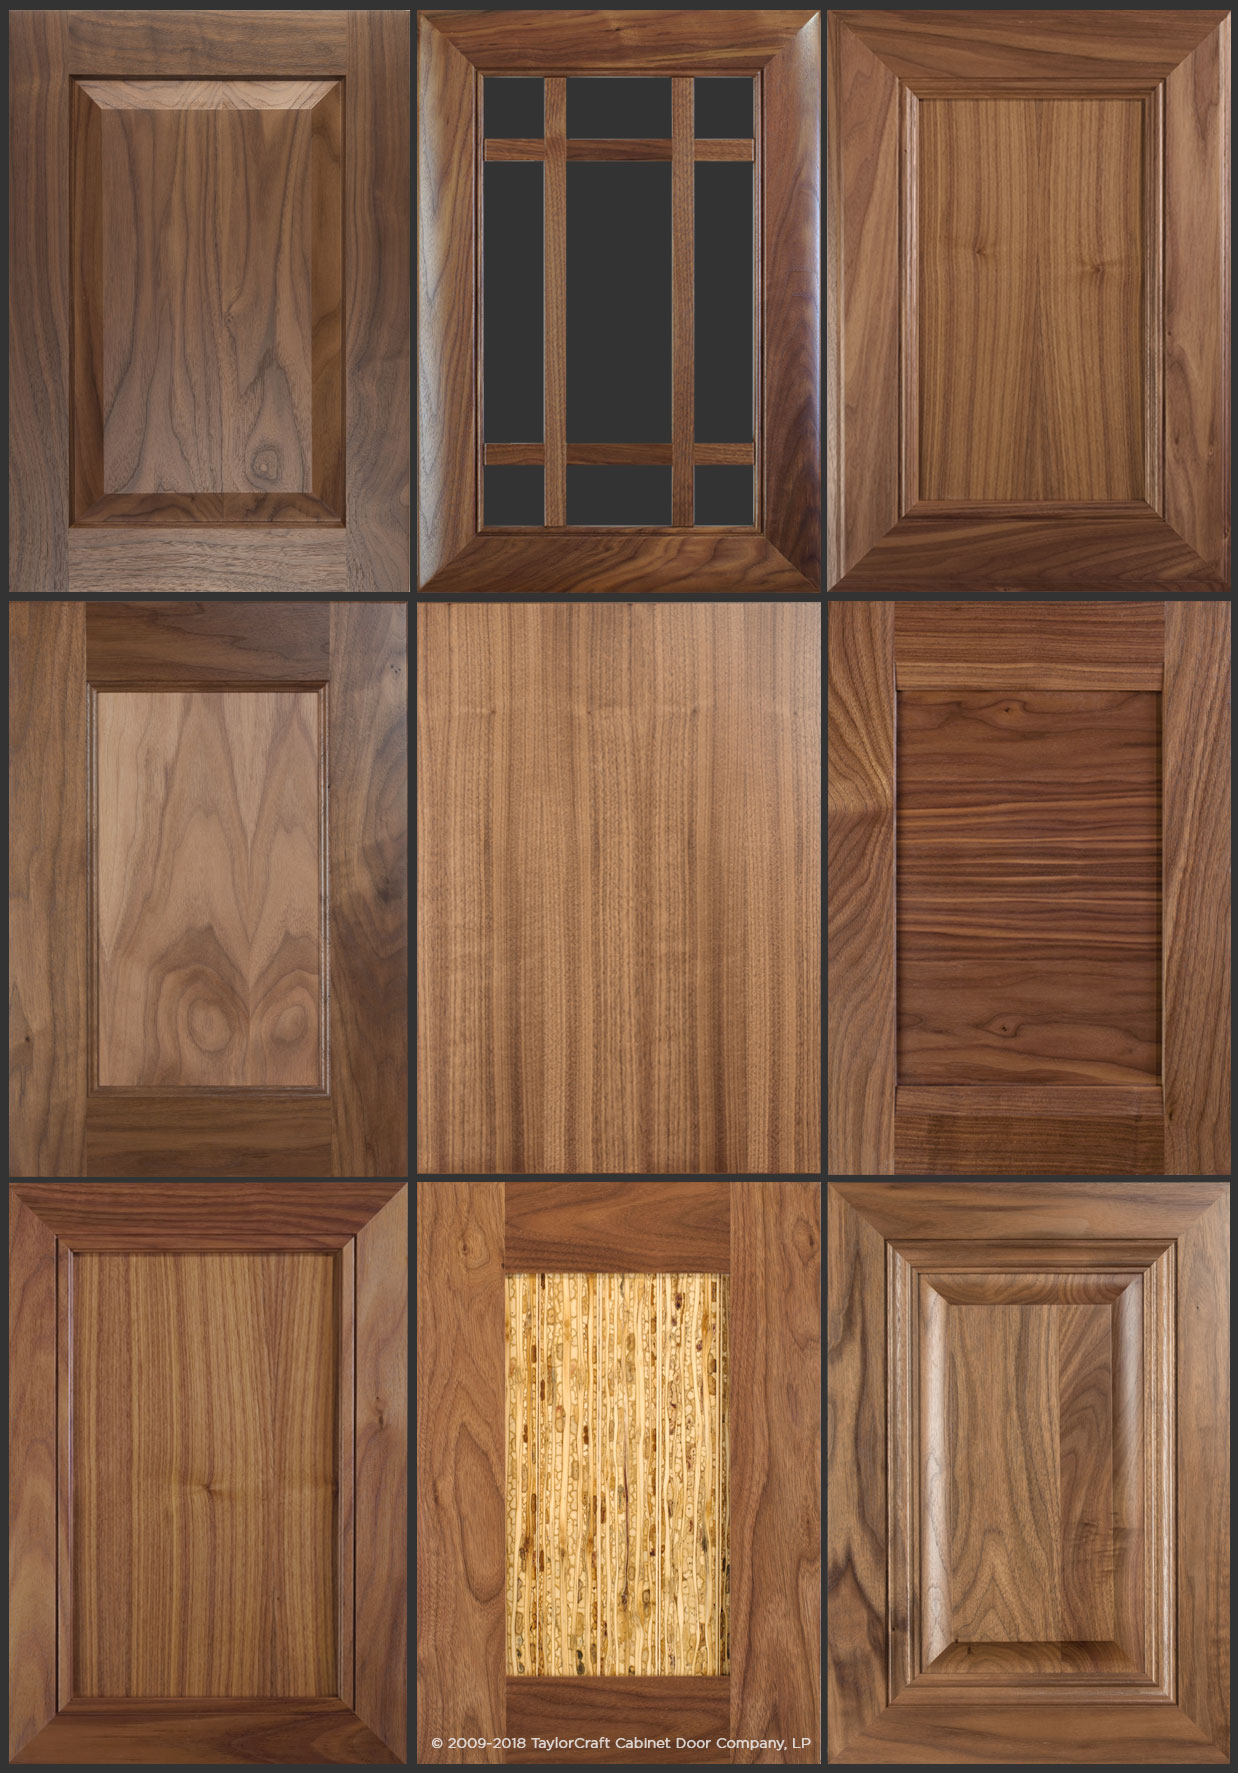 Walnut Cabinet Doors and Kitchen Cabinets - TaylorCraft ...